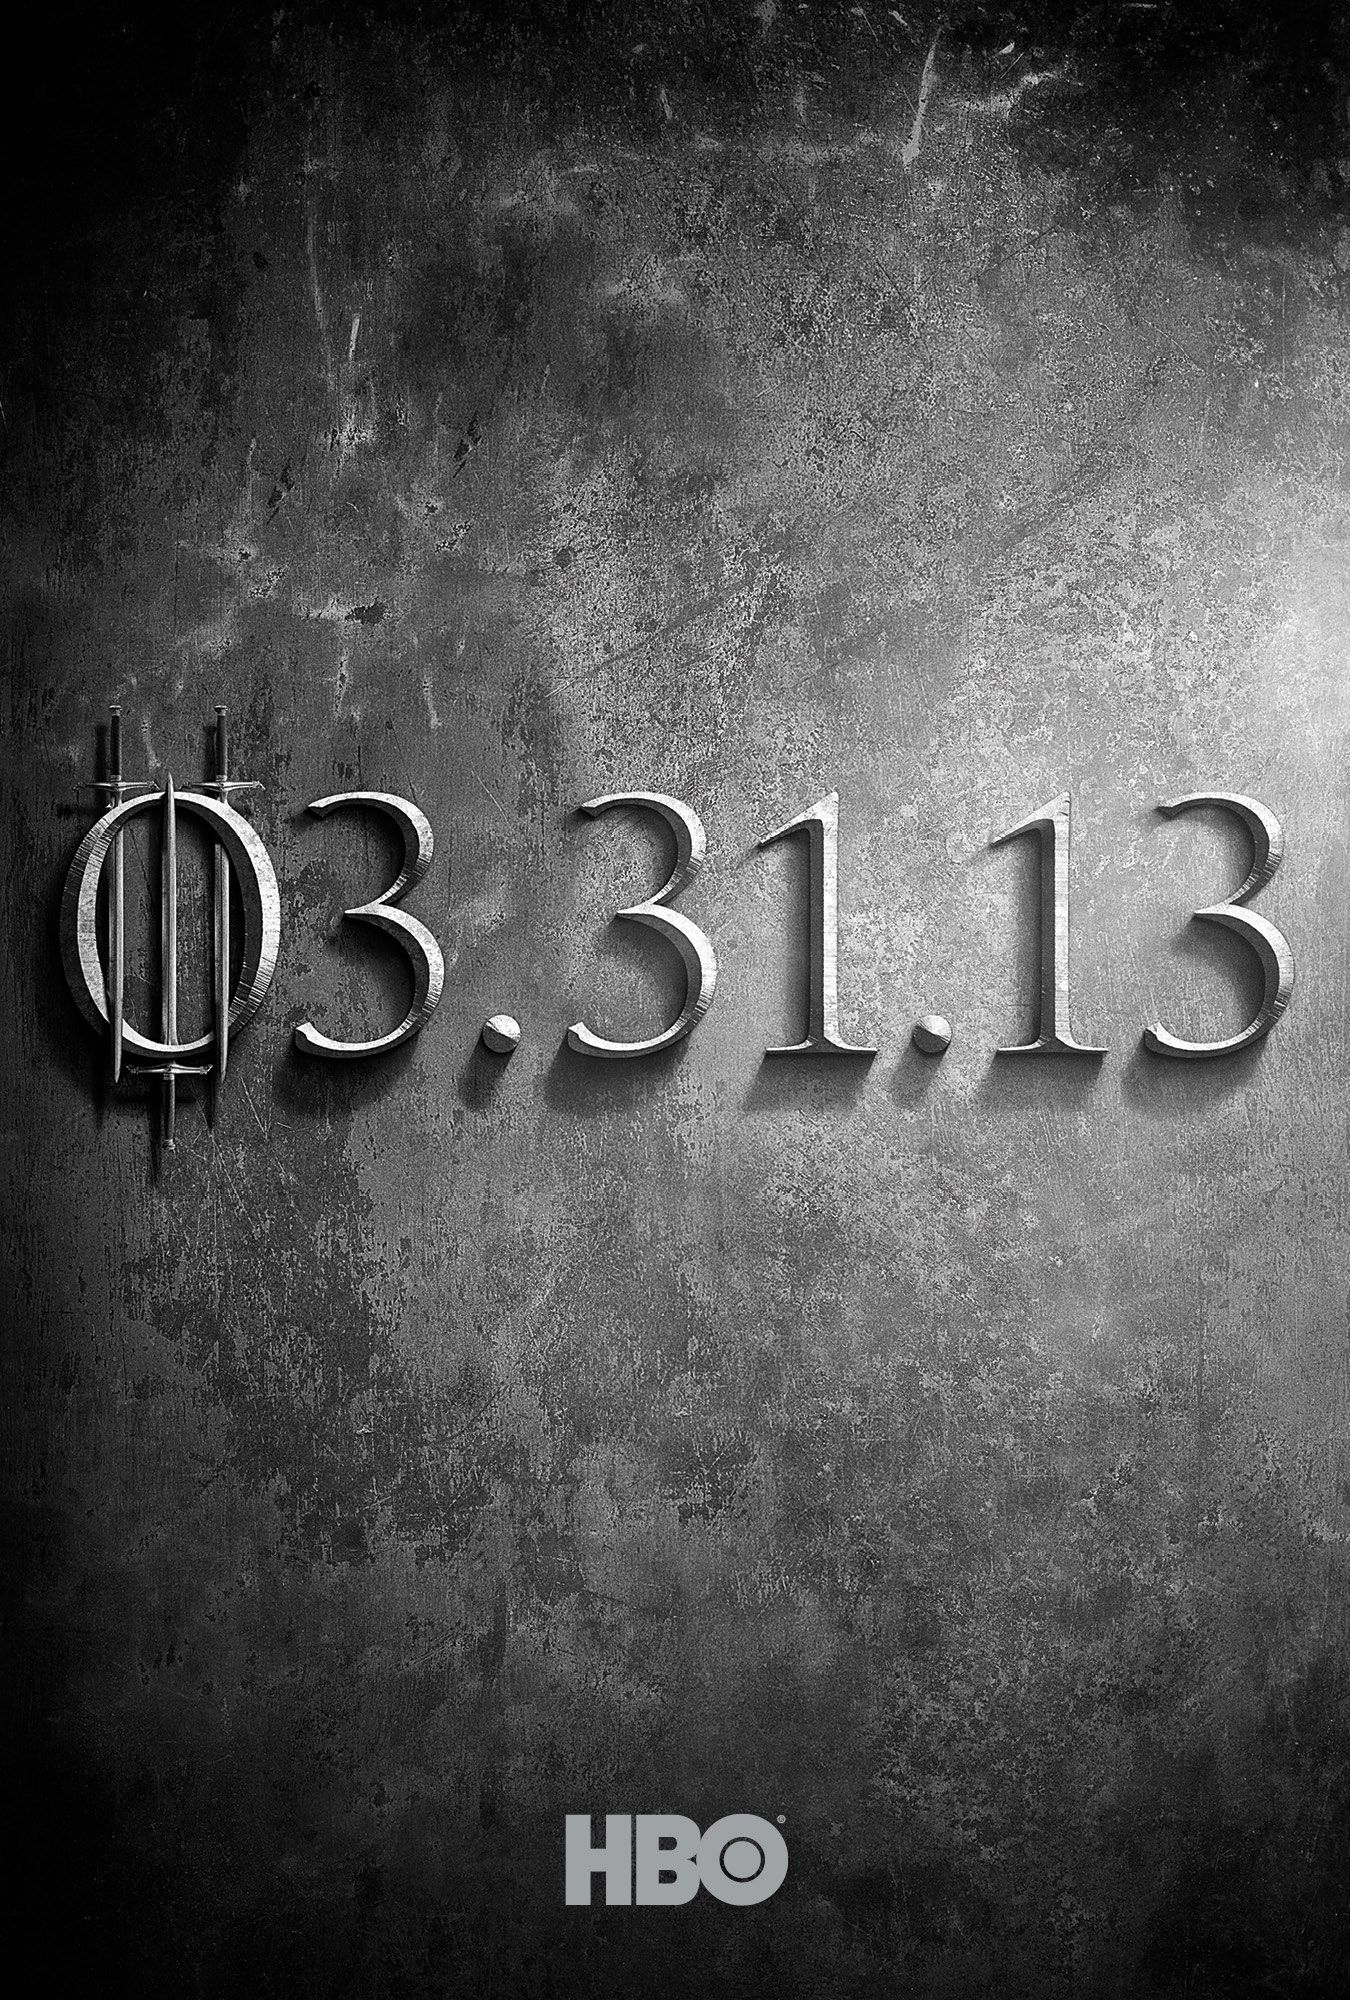 Game of Thrones Season 3 Premier Date Promo Art